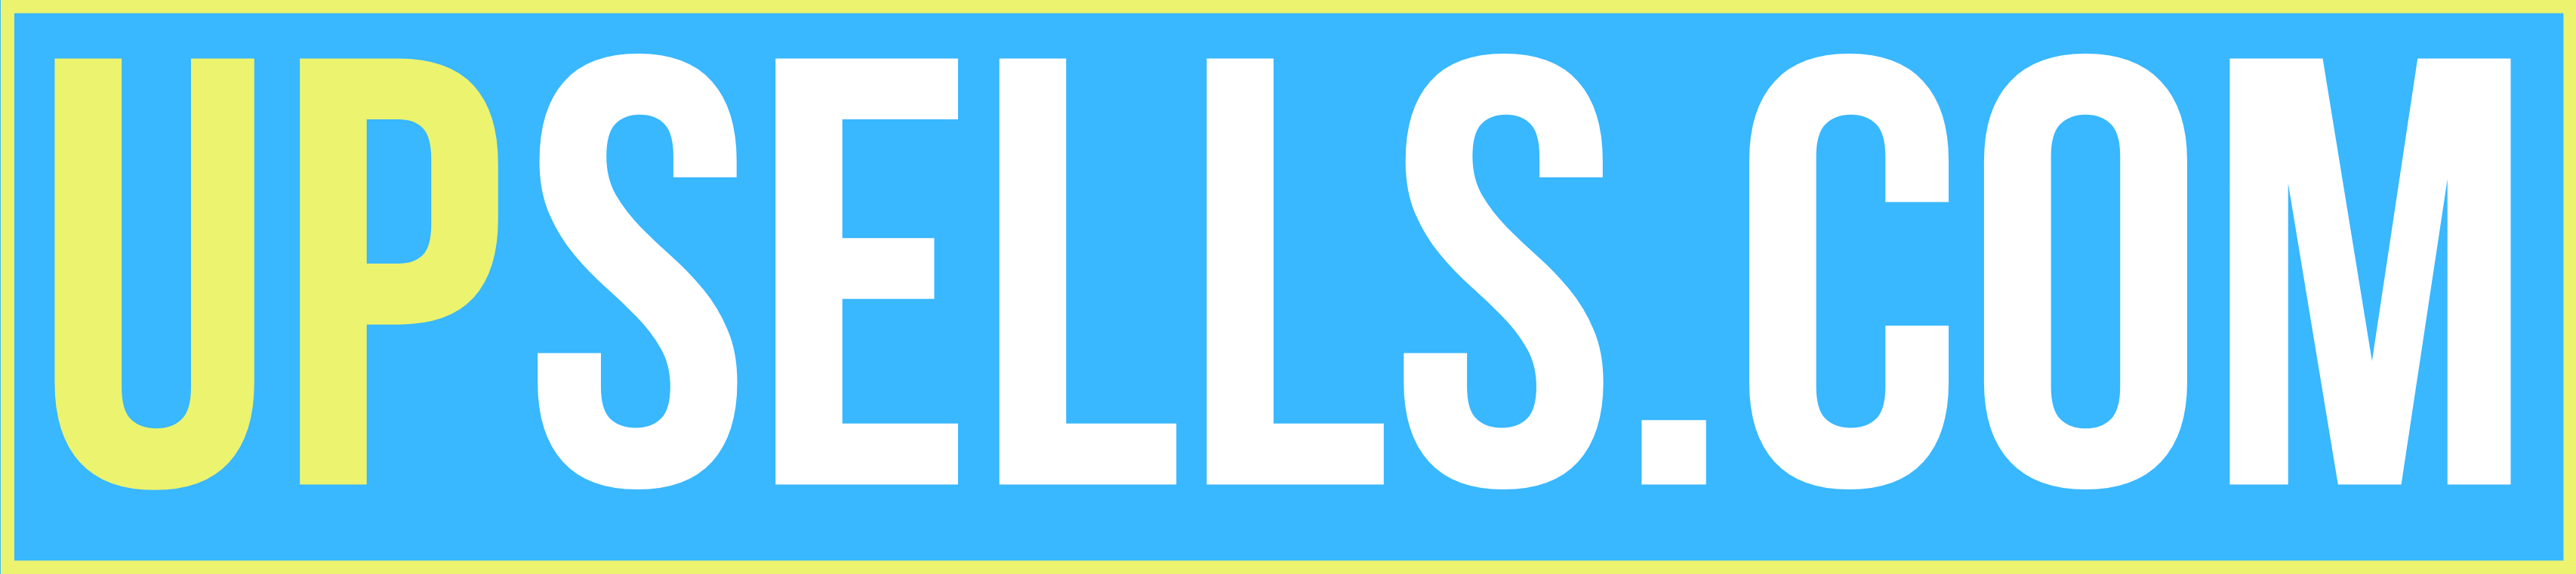 Upsells dot com logo